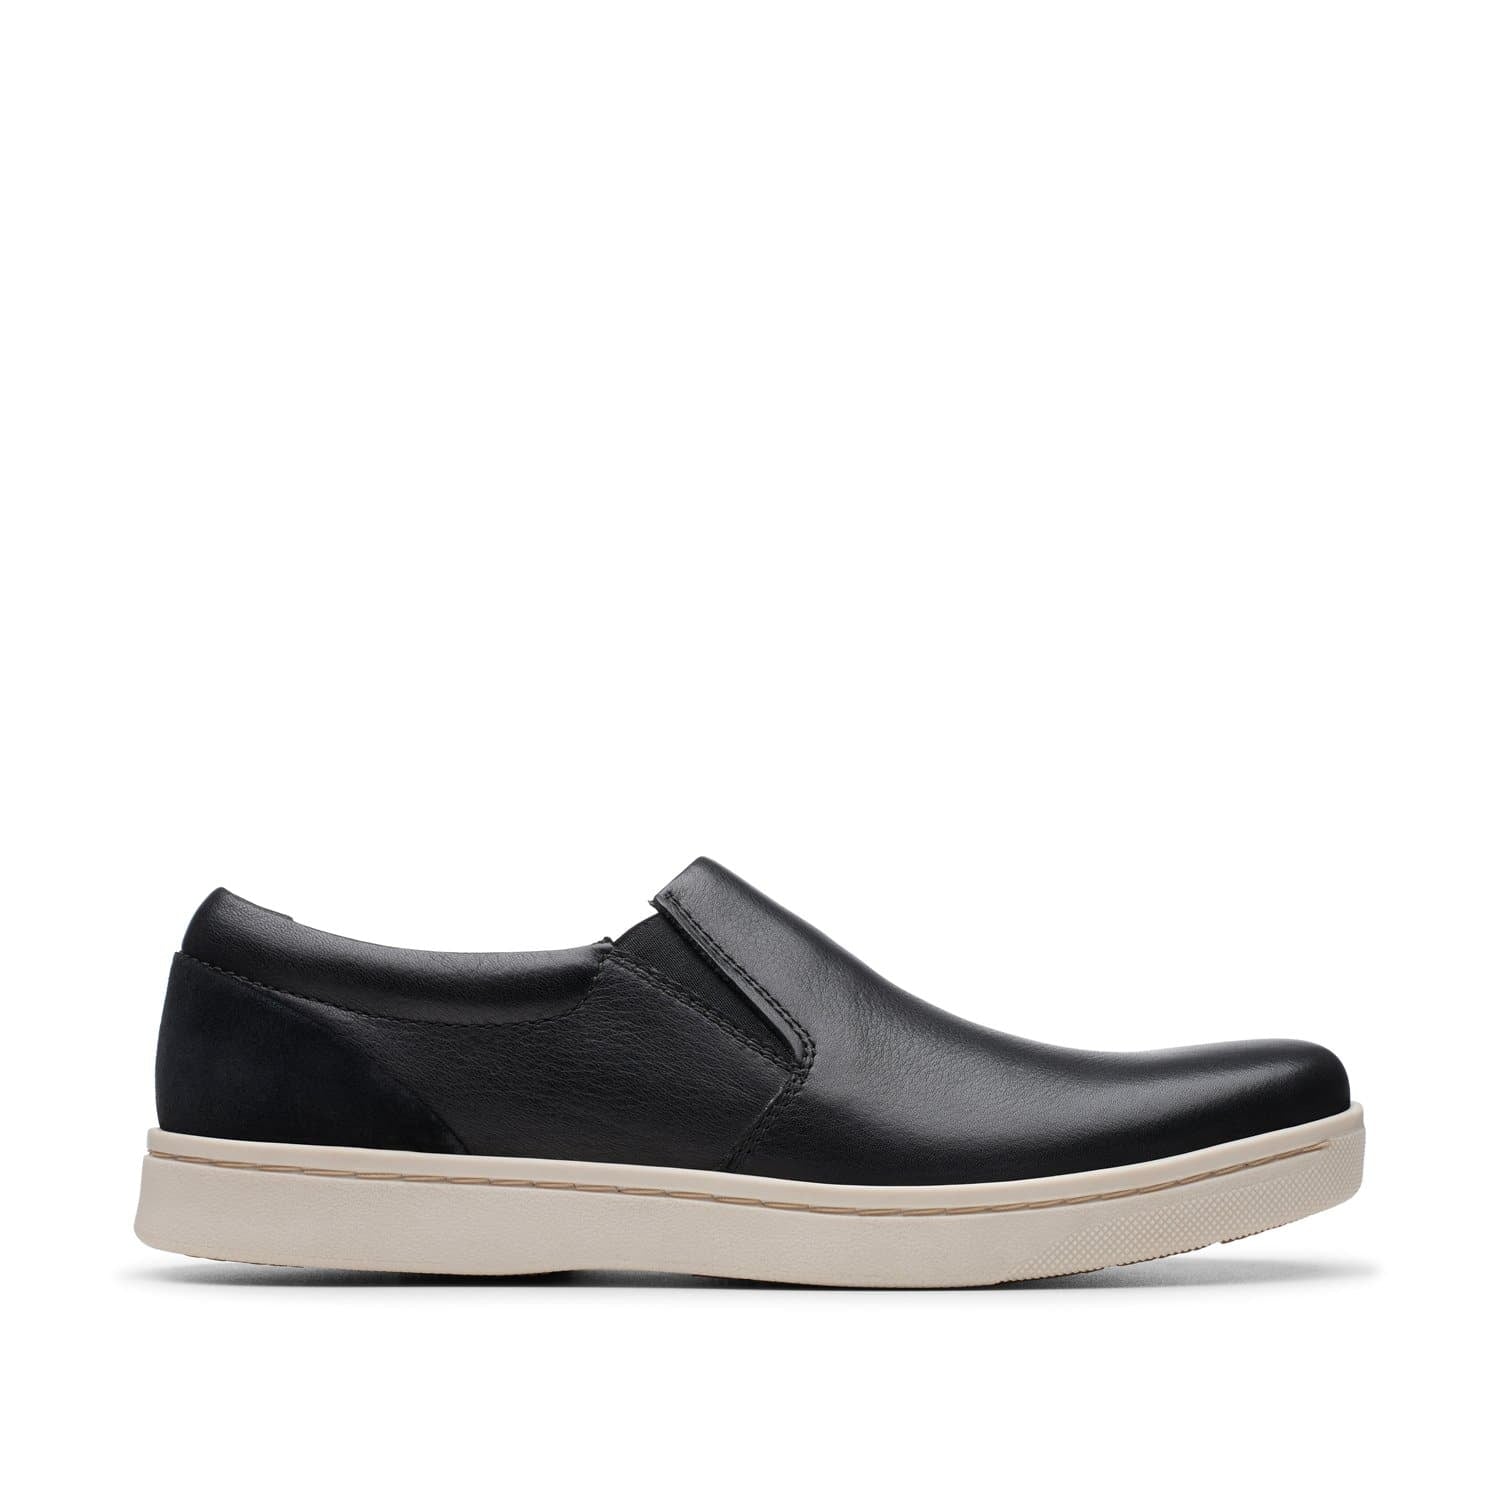 Clarks-Kitna-Free-Men's-Shoes-Black-Leather-26144884